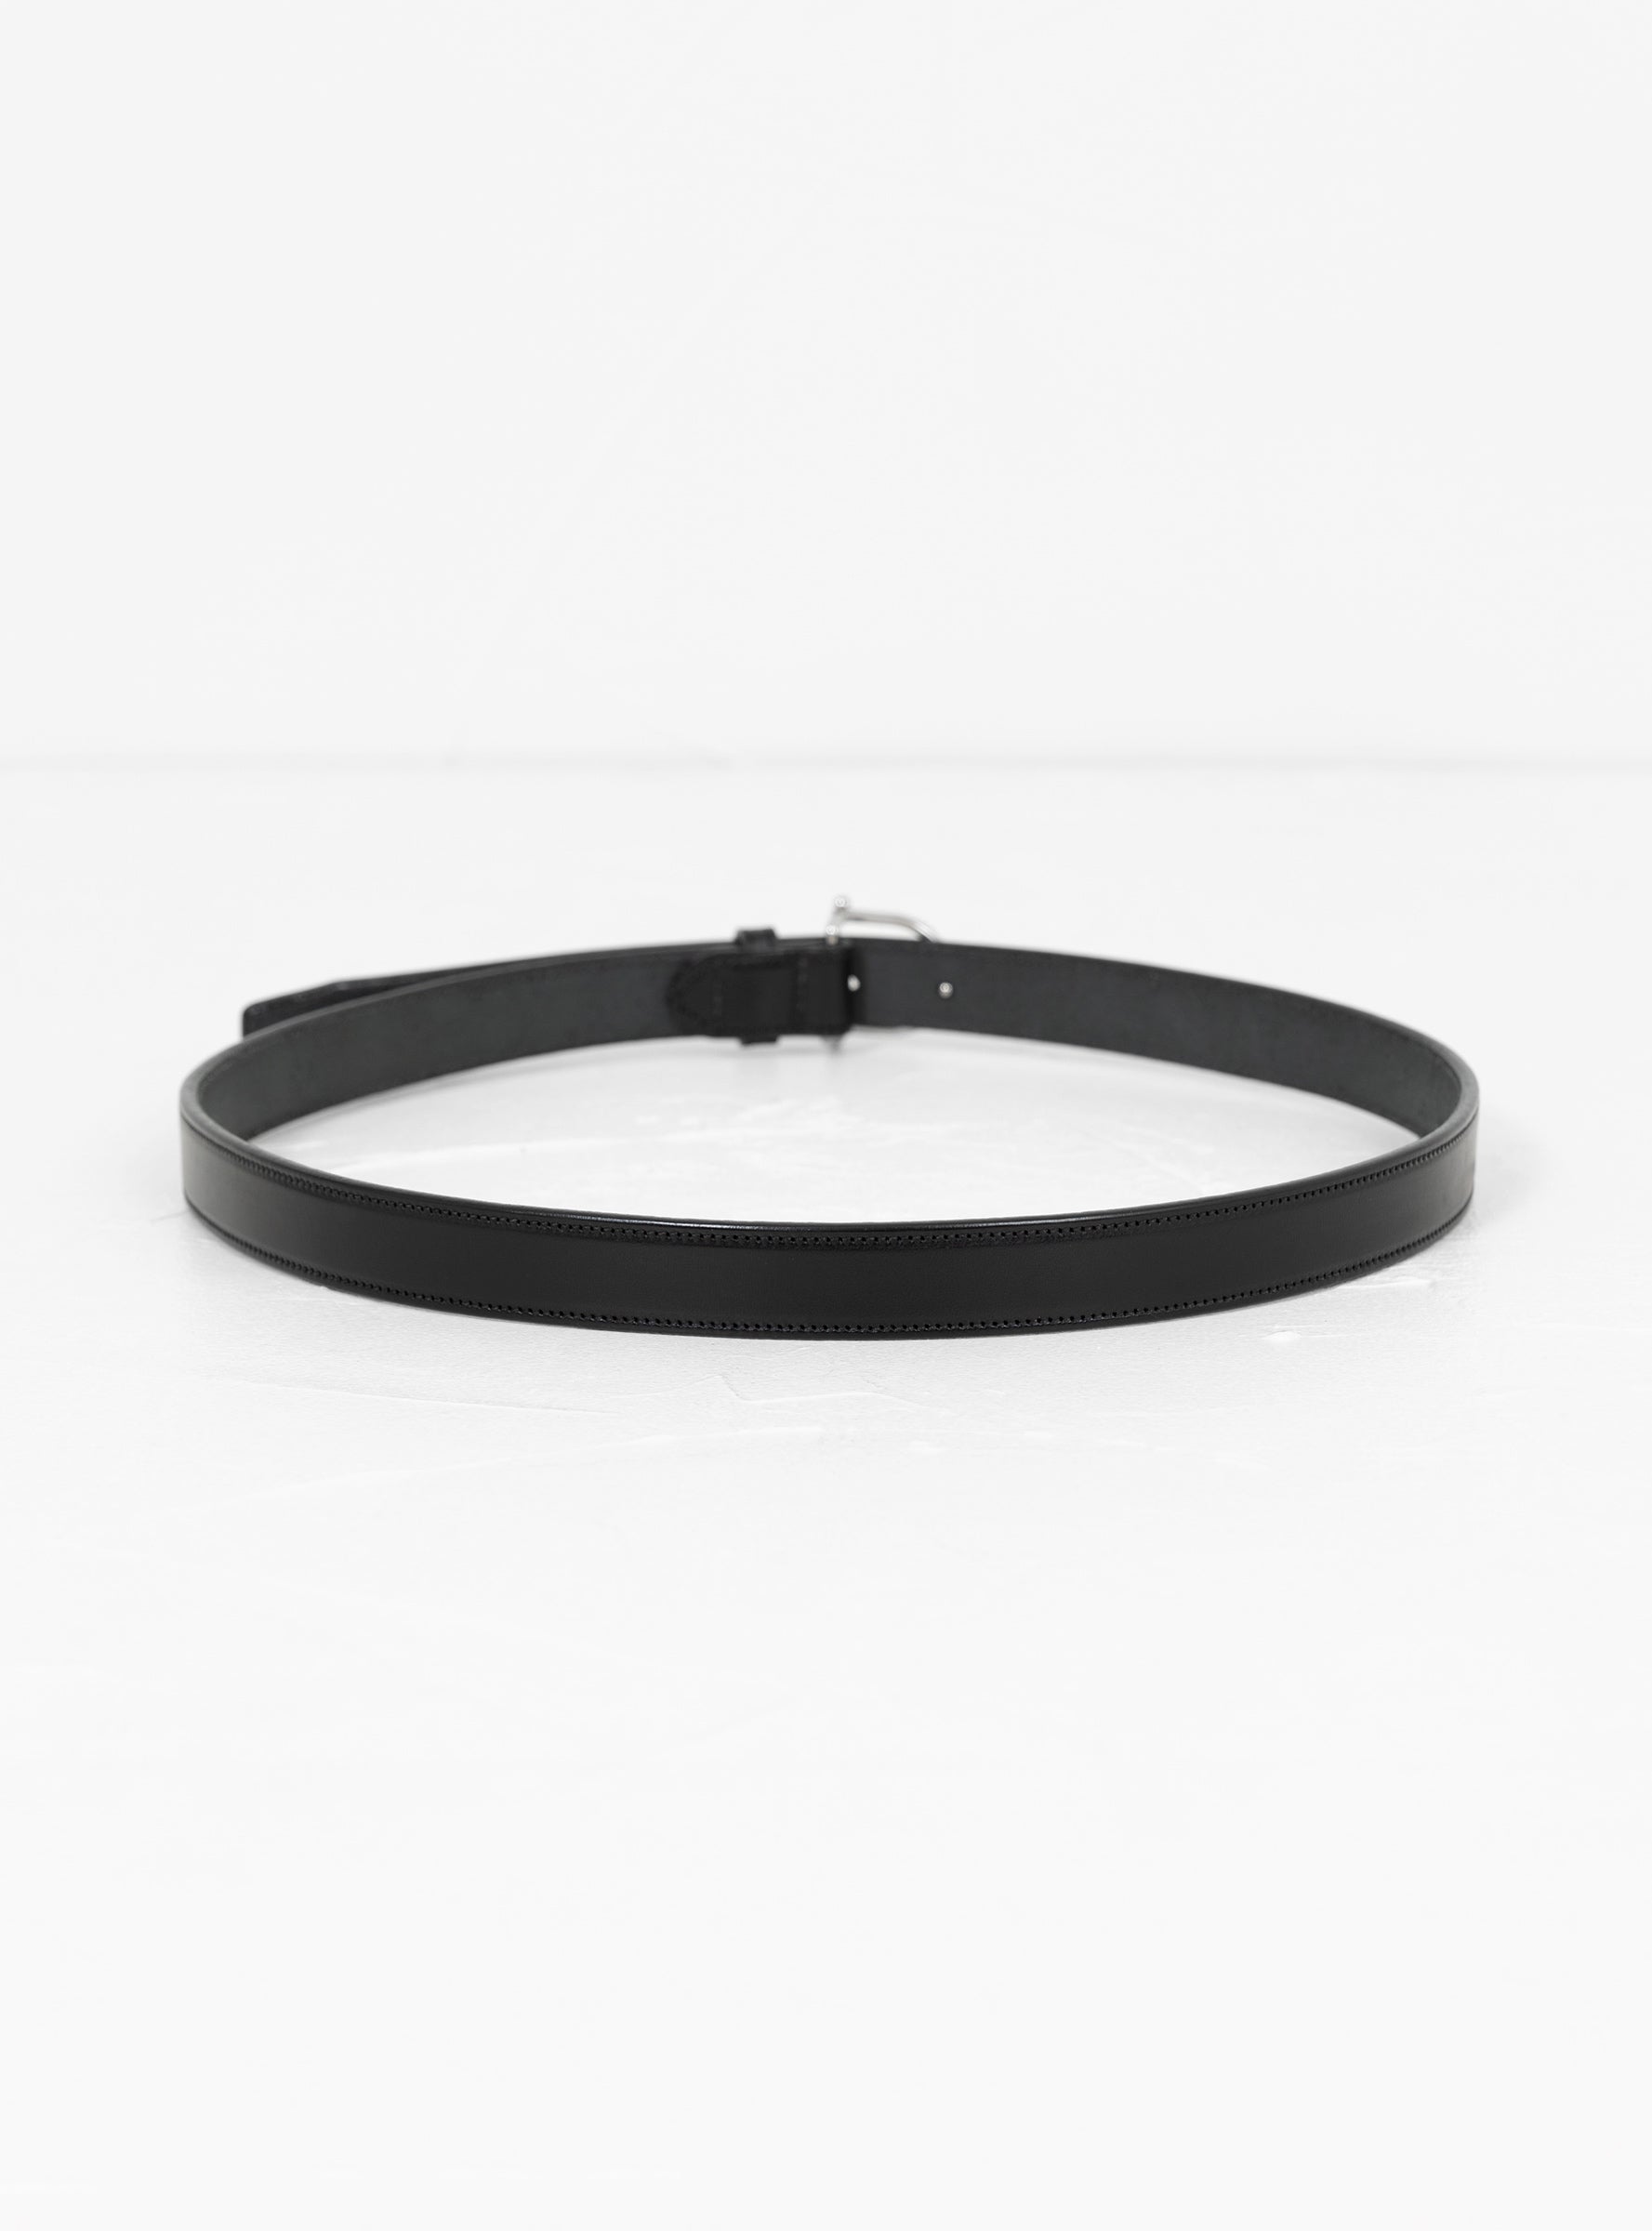  Tory Leather Spur Belt Black & Nickel - XL